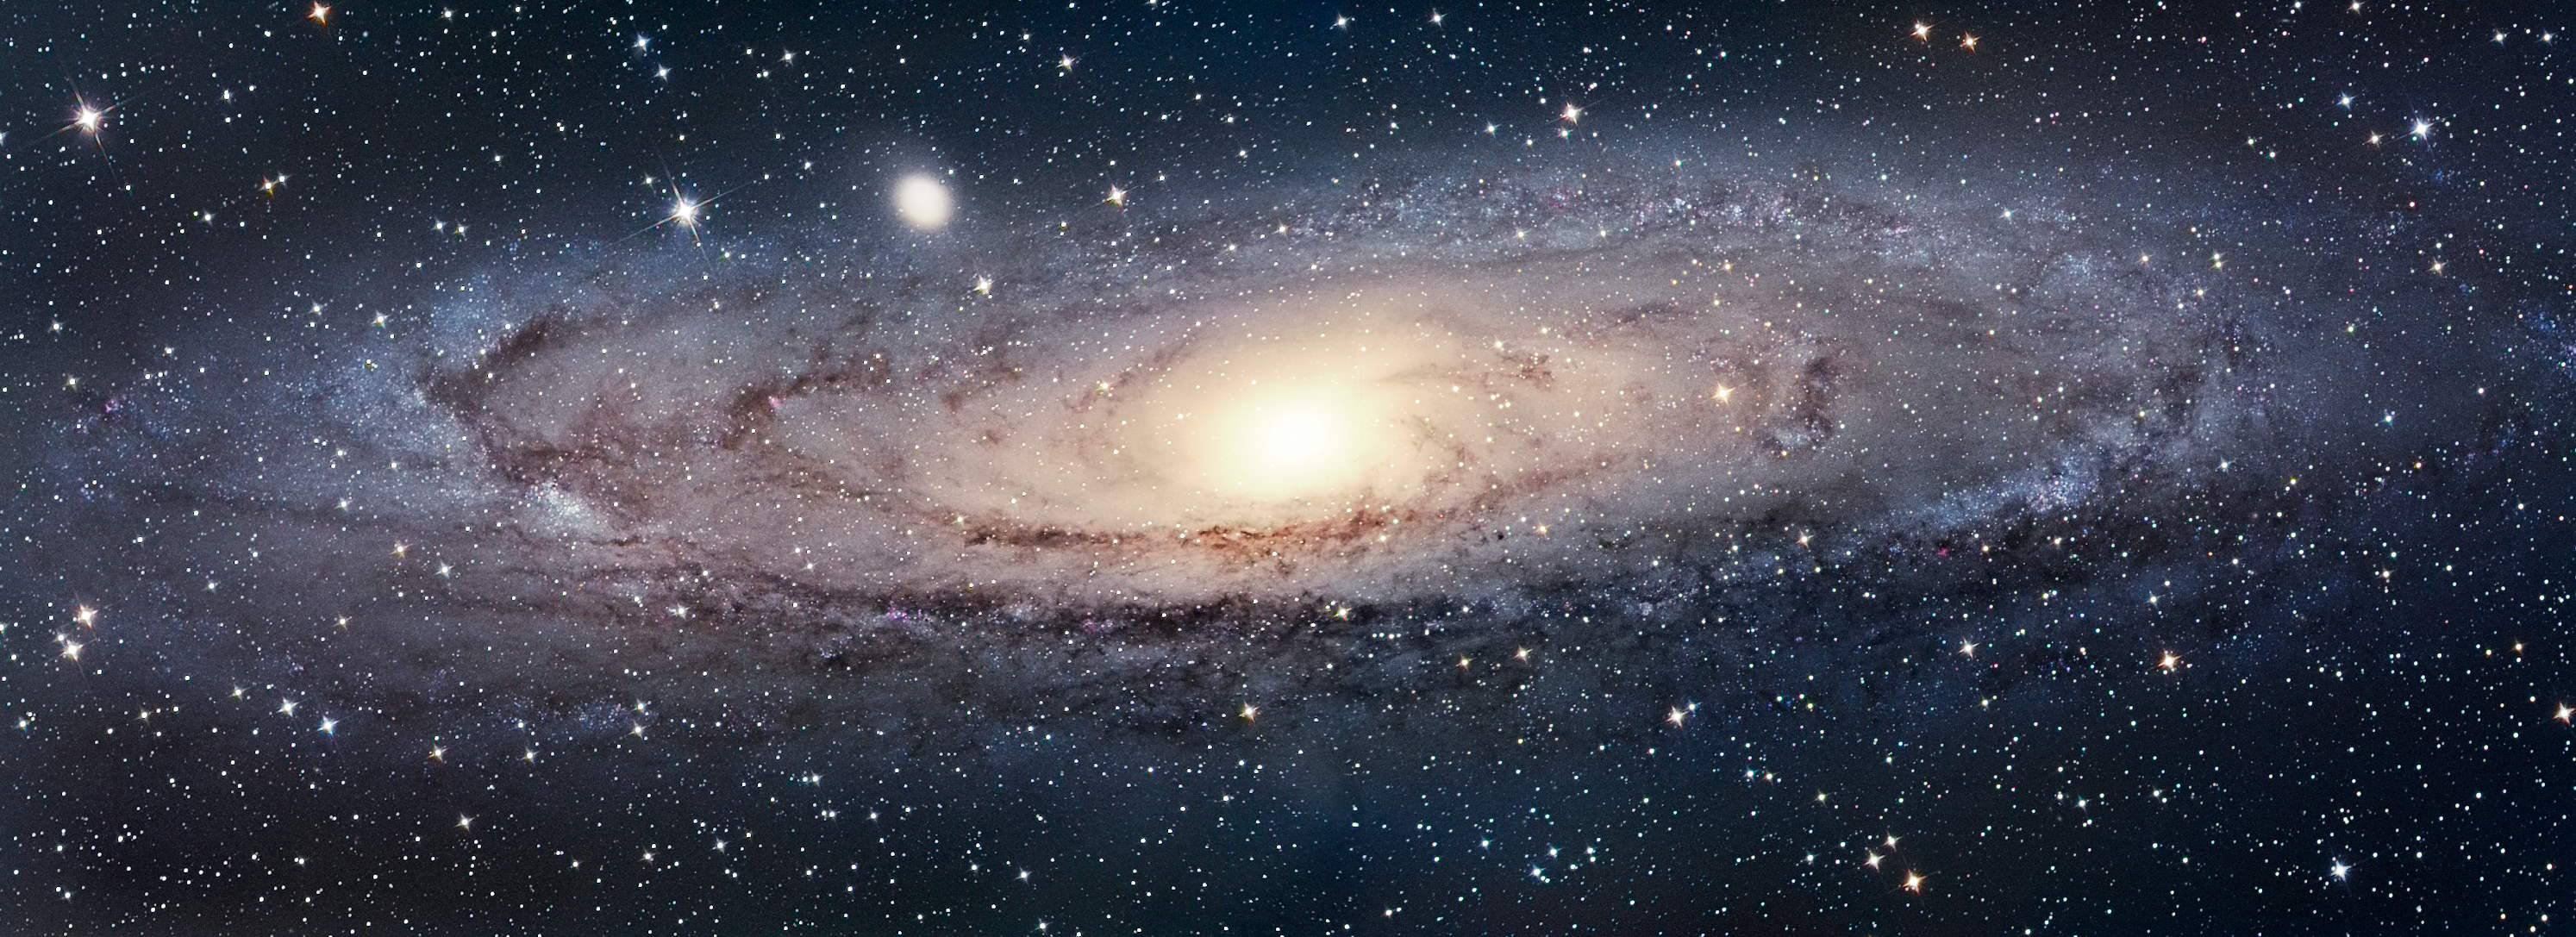 fond d'écran galaxy gratuit,galaxie,galaxie spirale,atmosphère,ciel,cosmos